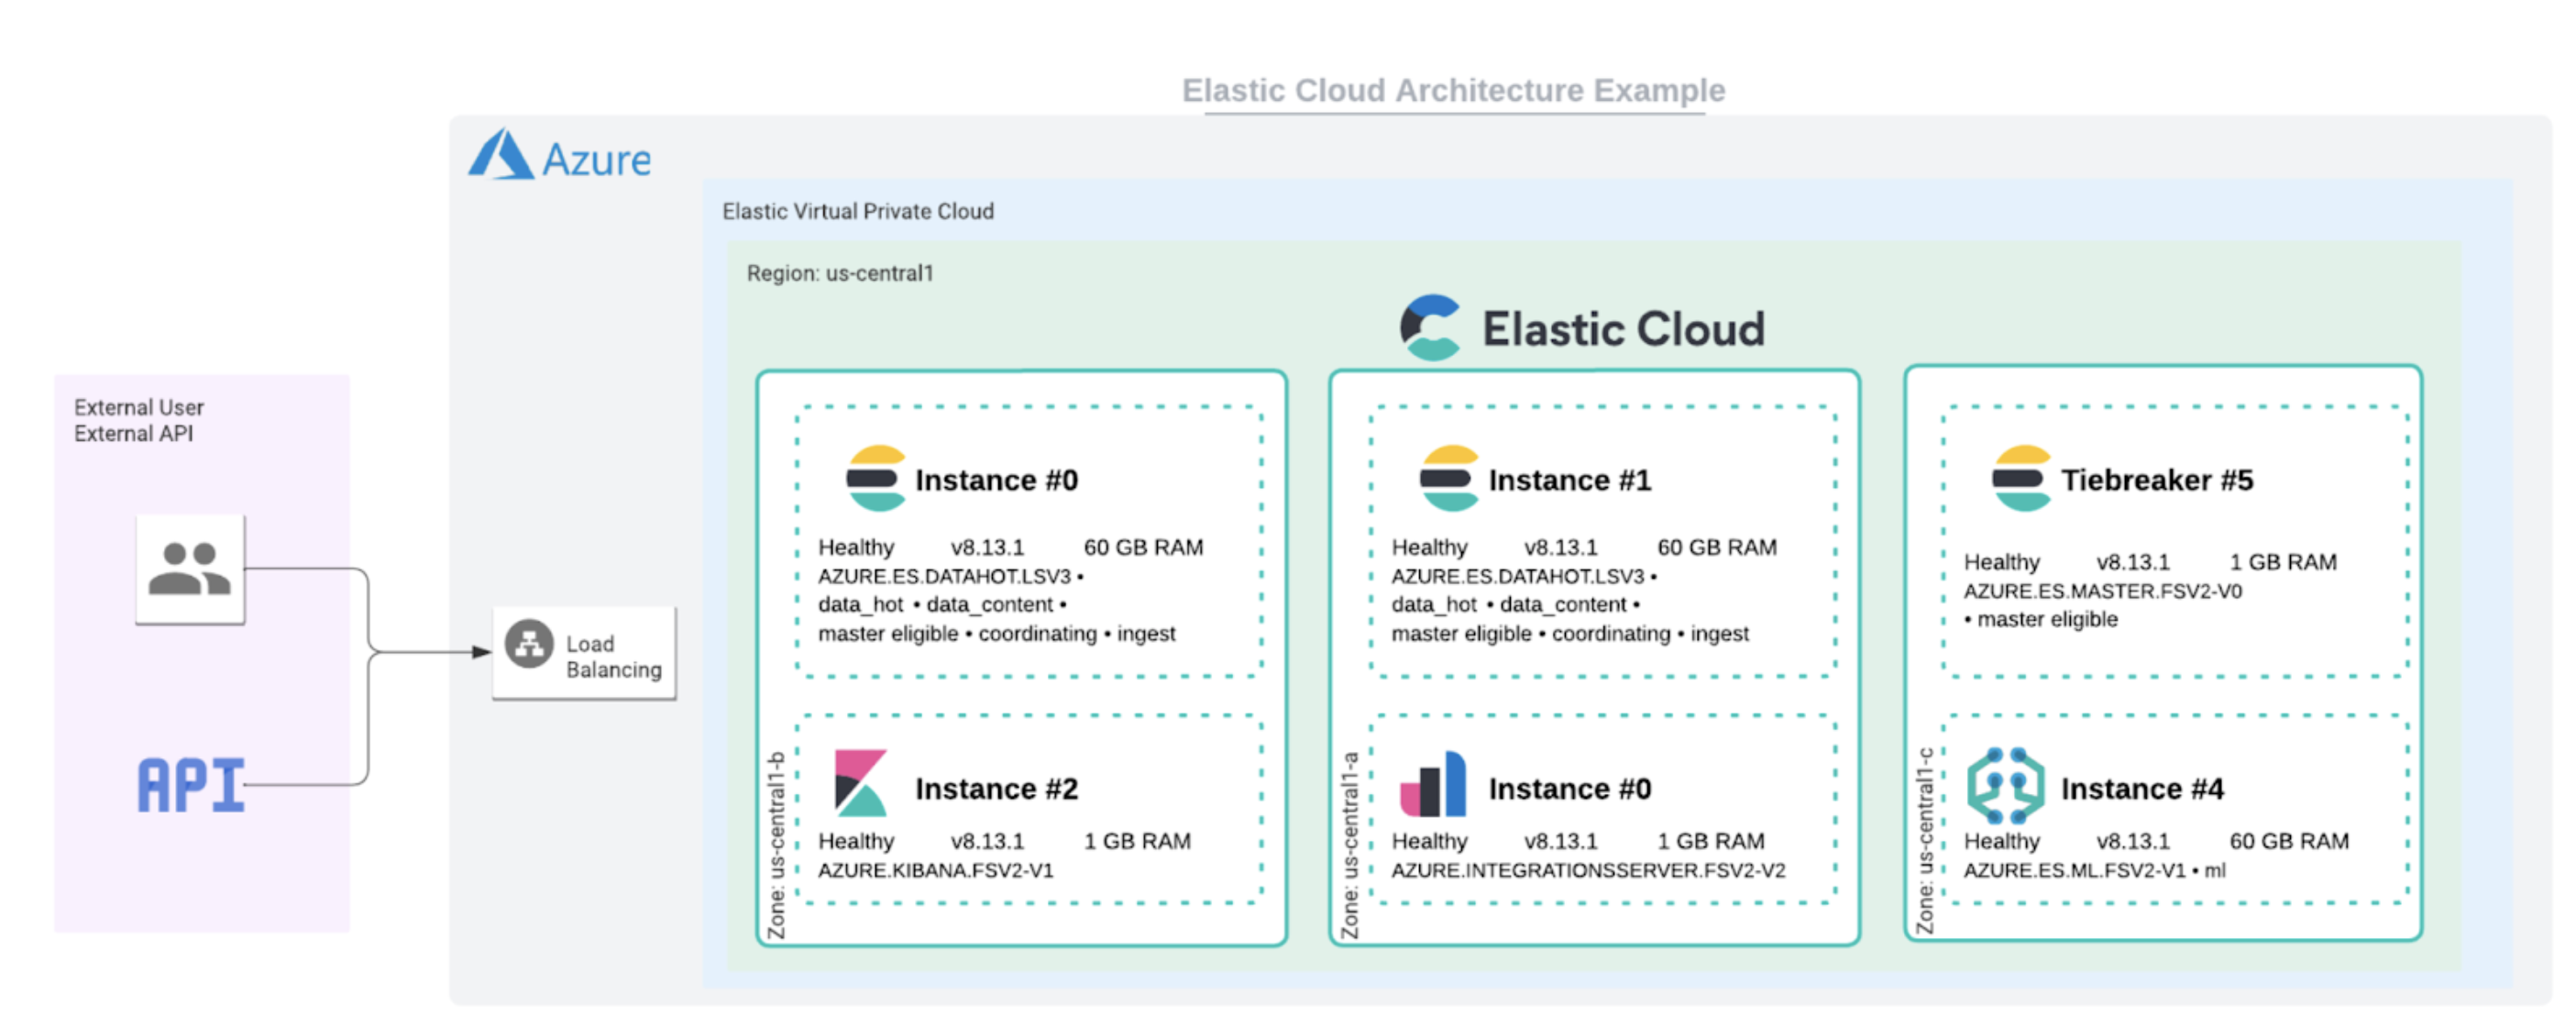 Elastic Cloud adds Elasticsearch Vector Database optimized profile to Microsoft Azure